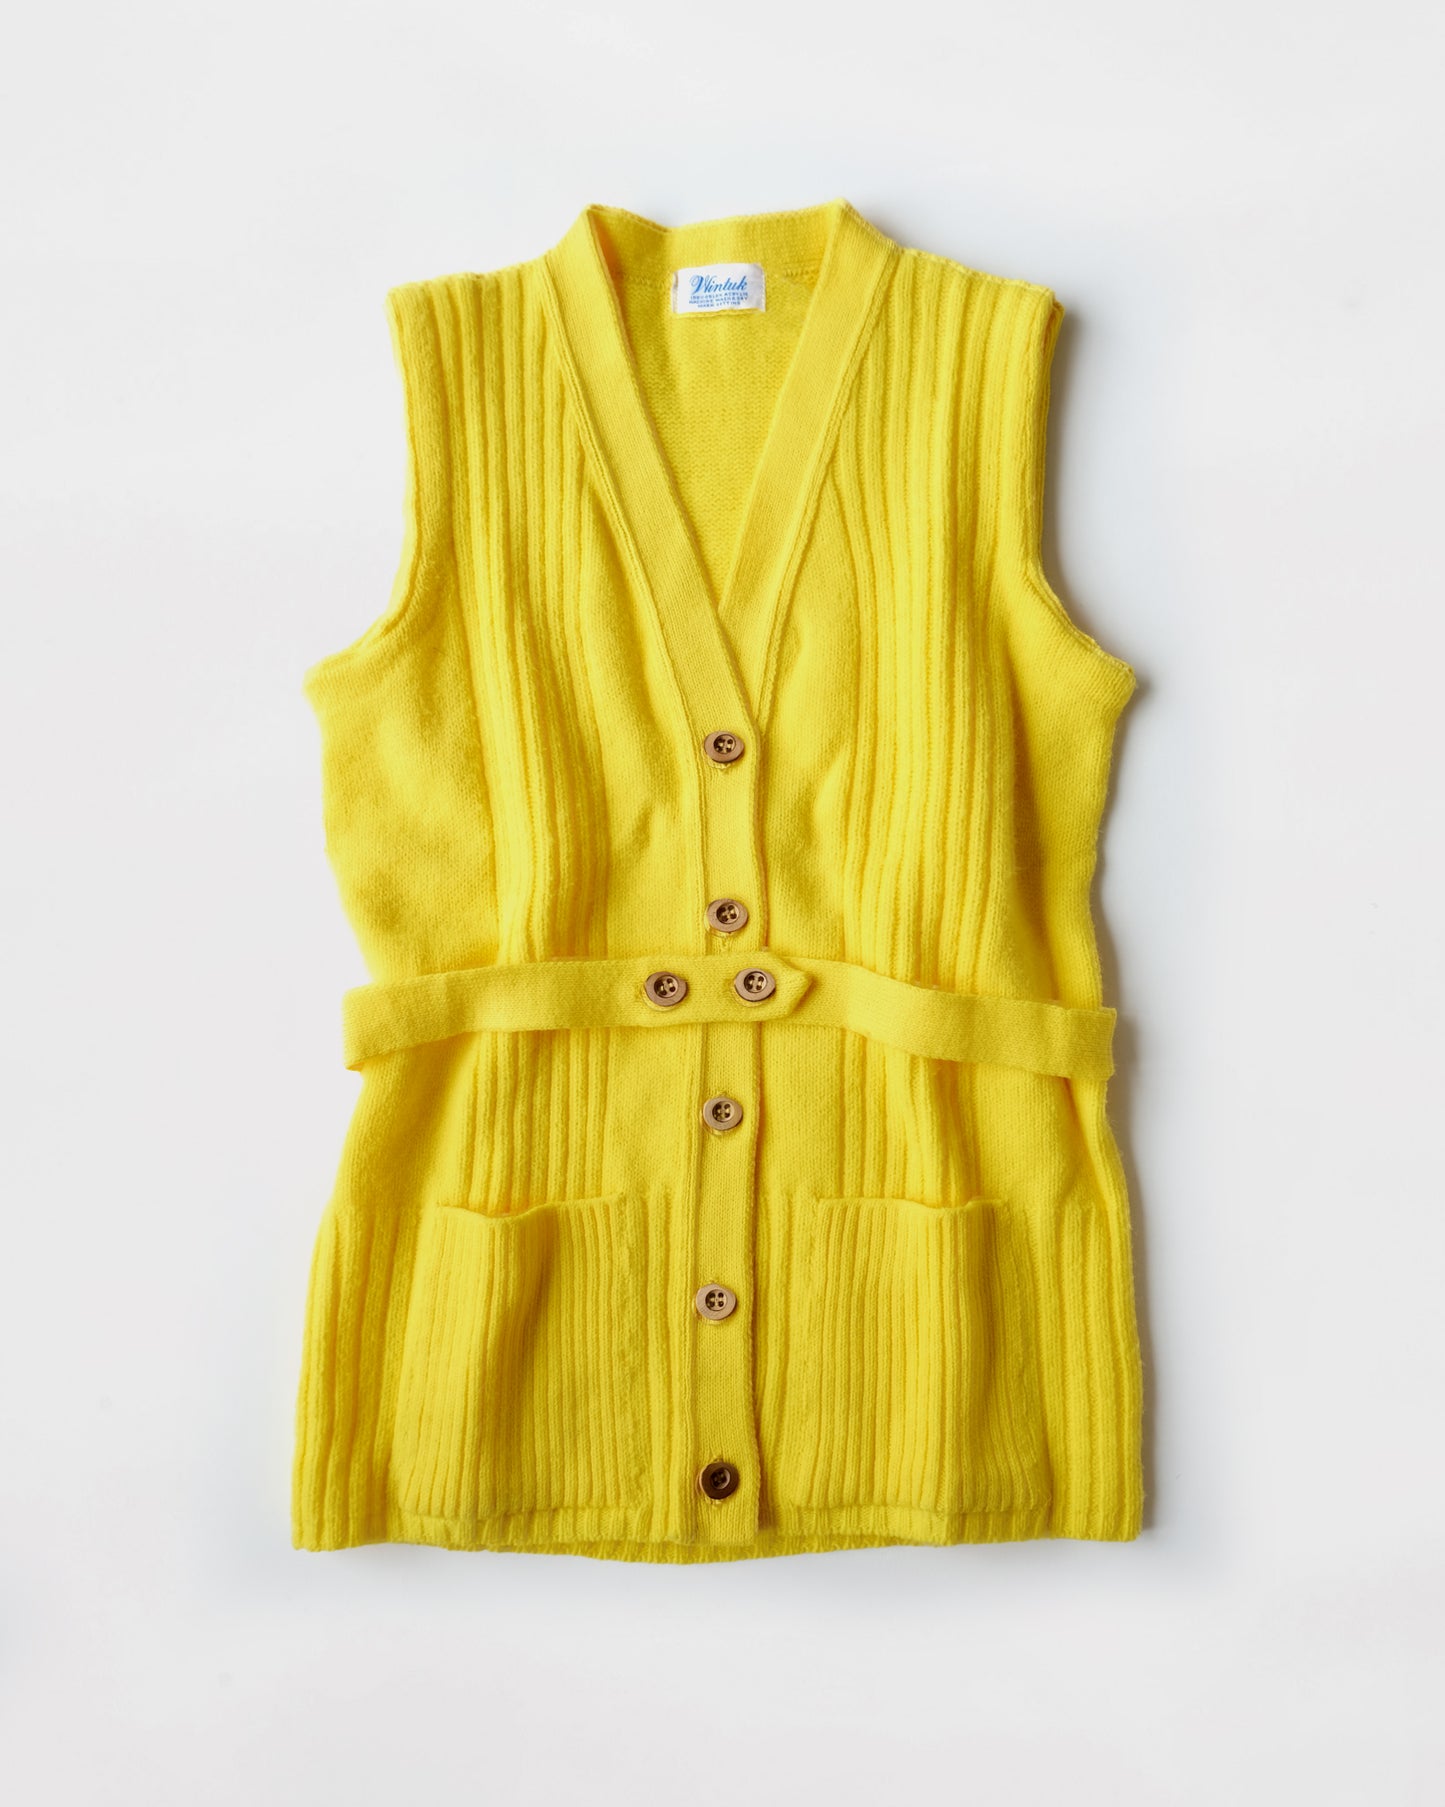 NOS Open Knit Vest - Yellow